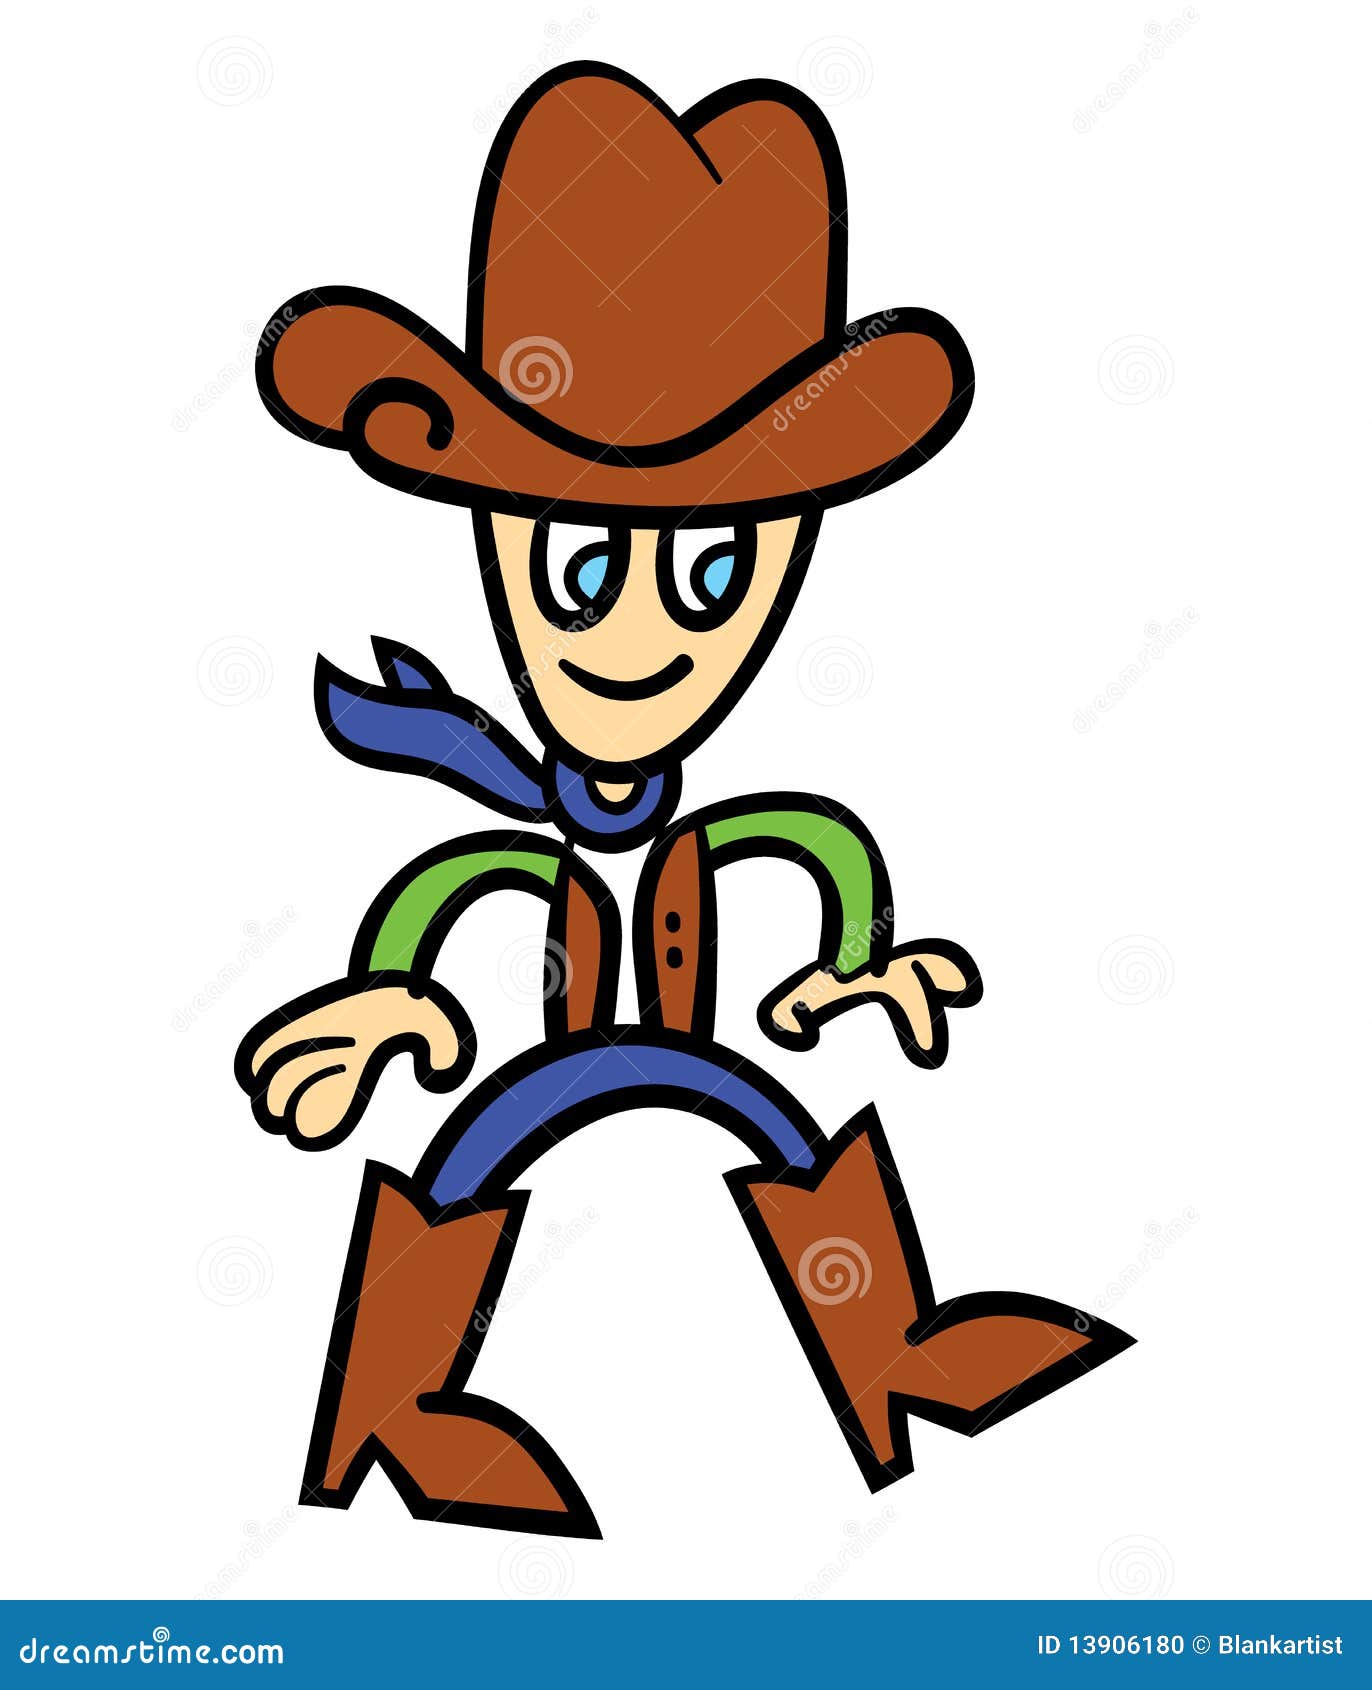 Cartoon cowboy stock vector. Illustration of person, scarf - 13906180